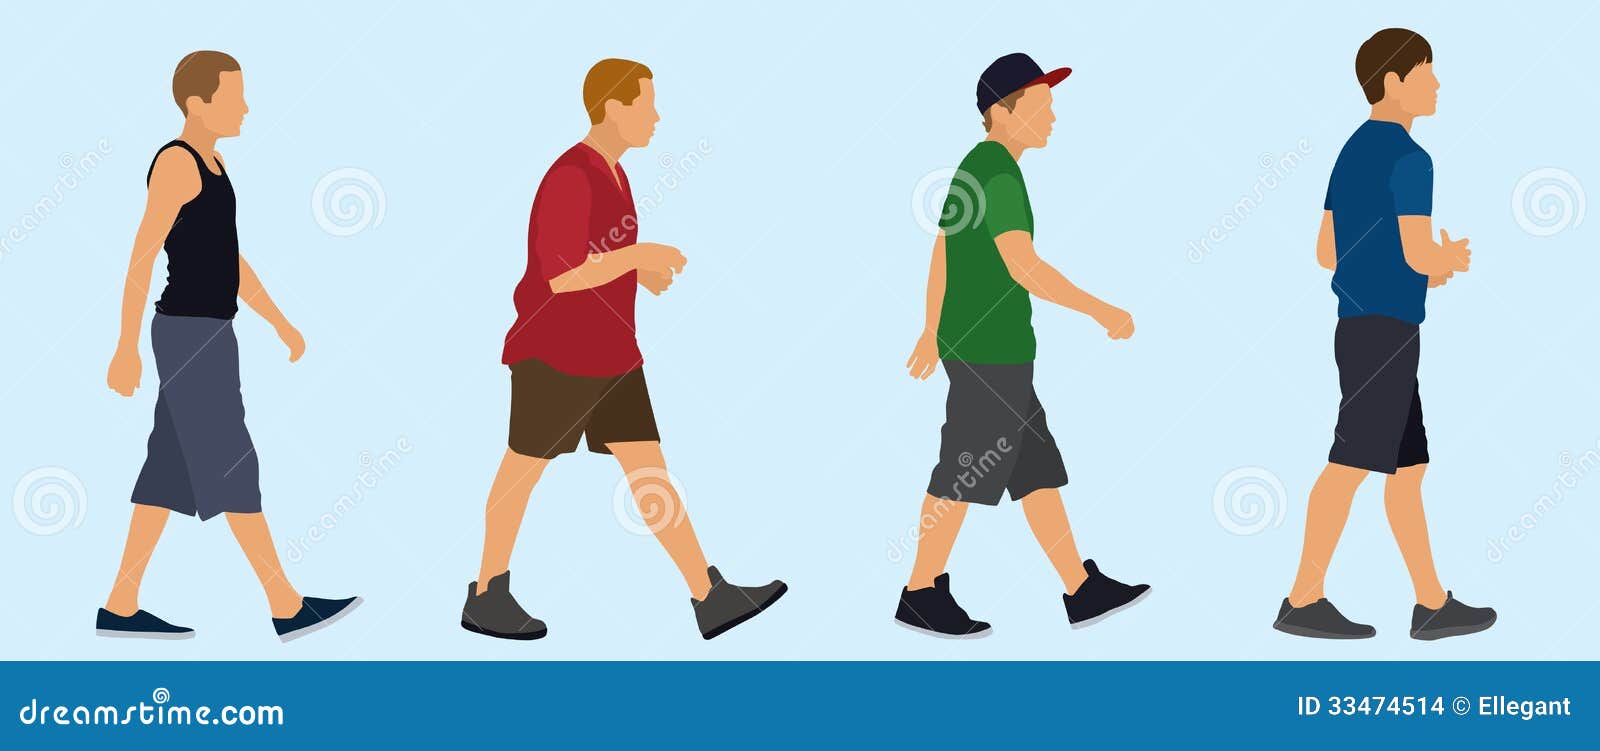 Teen Boys Walking stock vector. Illustration of vector - 33474514